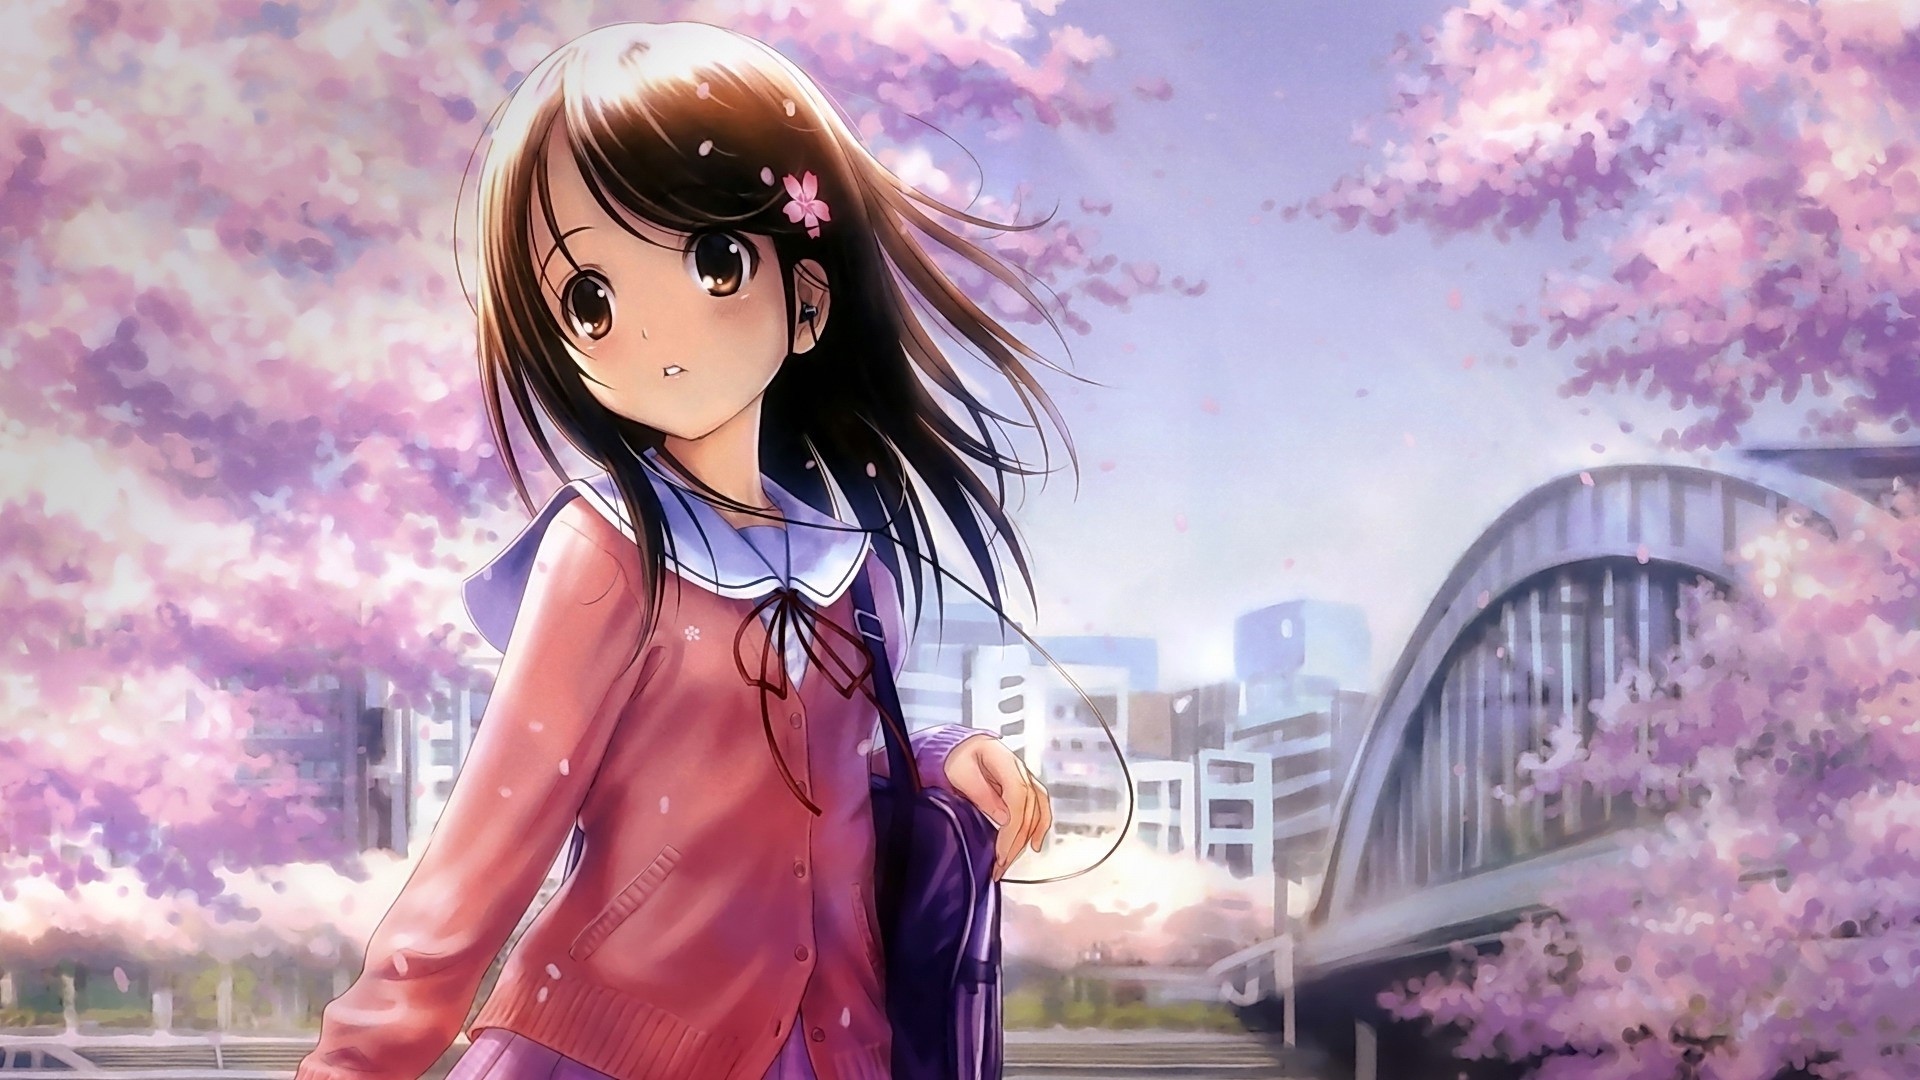 Cute Anime Girl a wallpaper